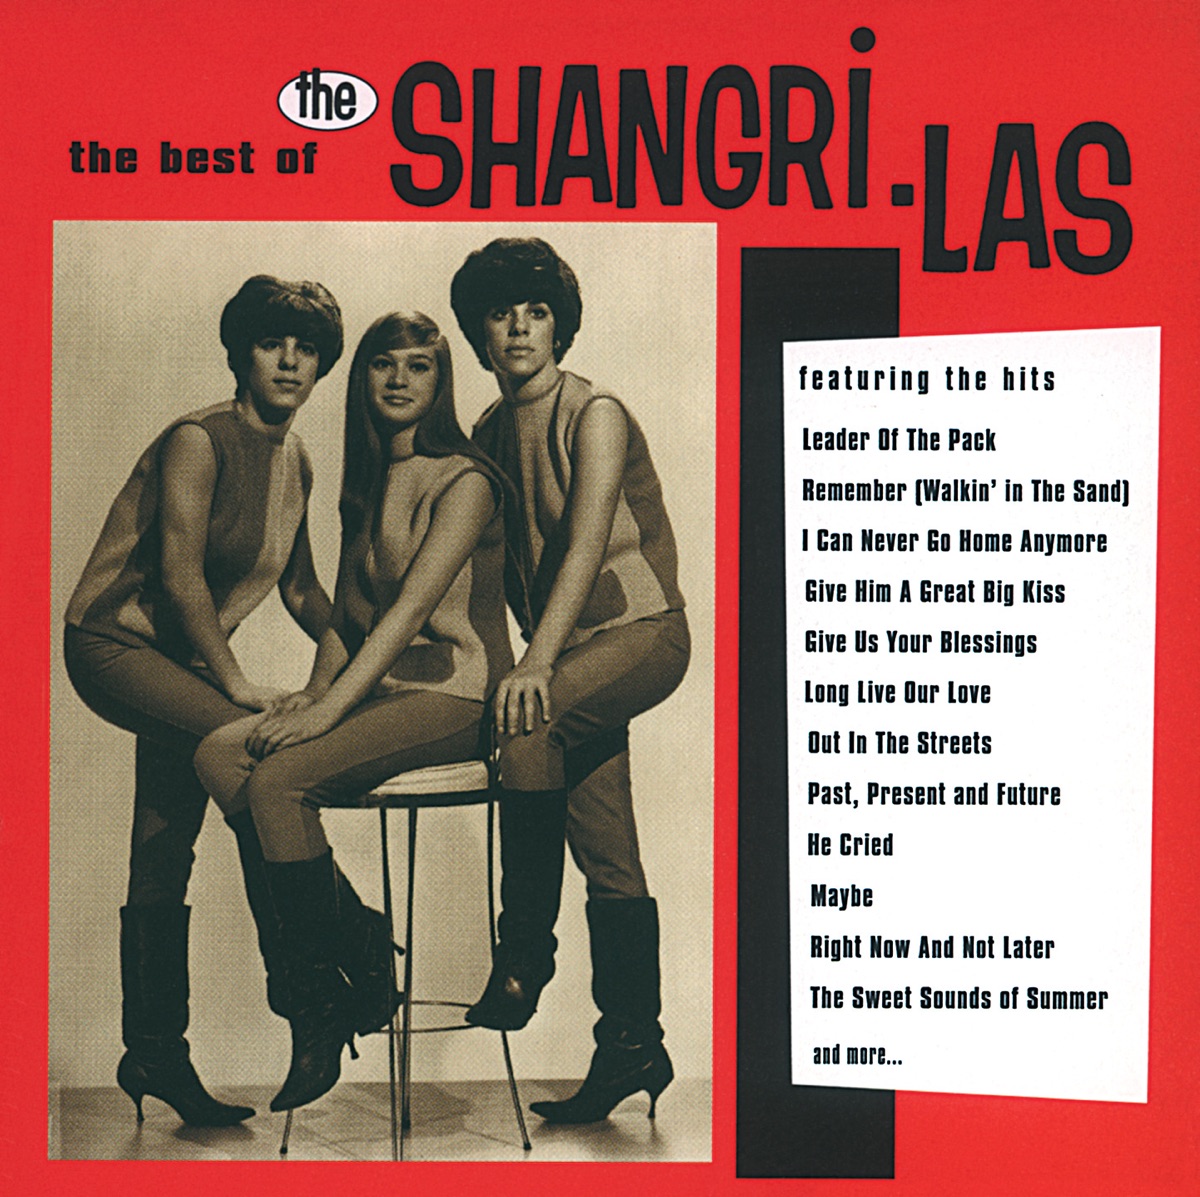 ‎The Best of the Shangri-las by The Shangri-Las on Apple Music